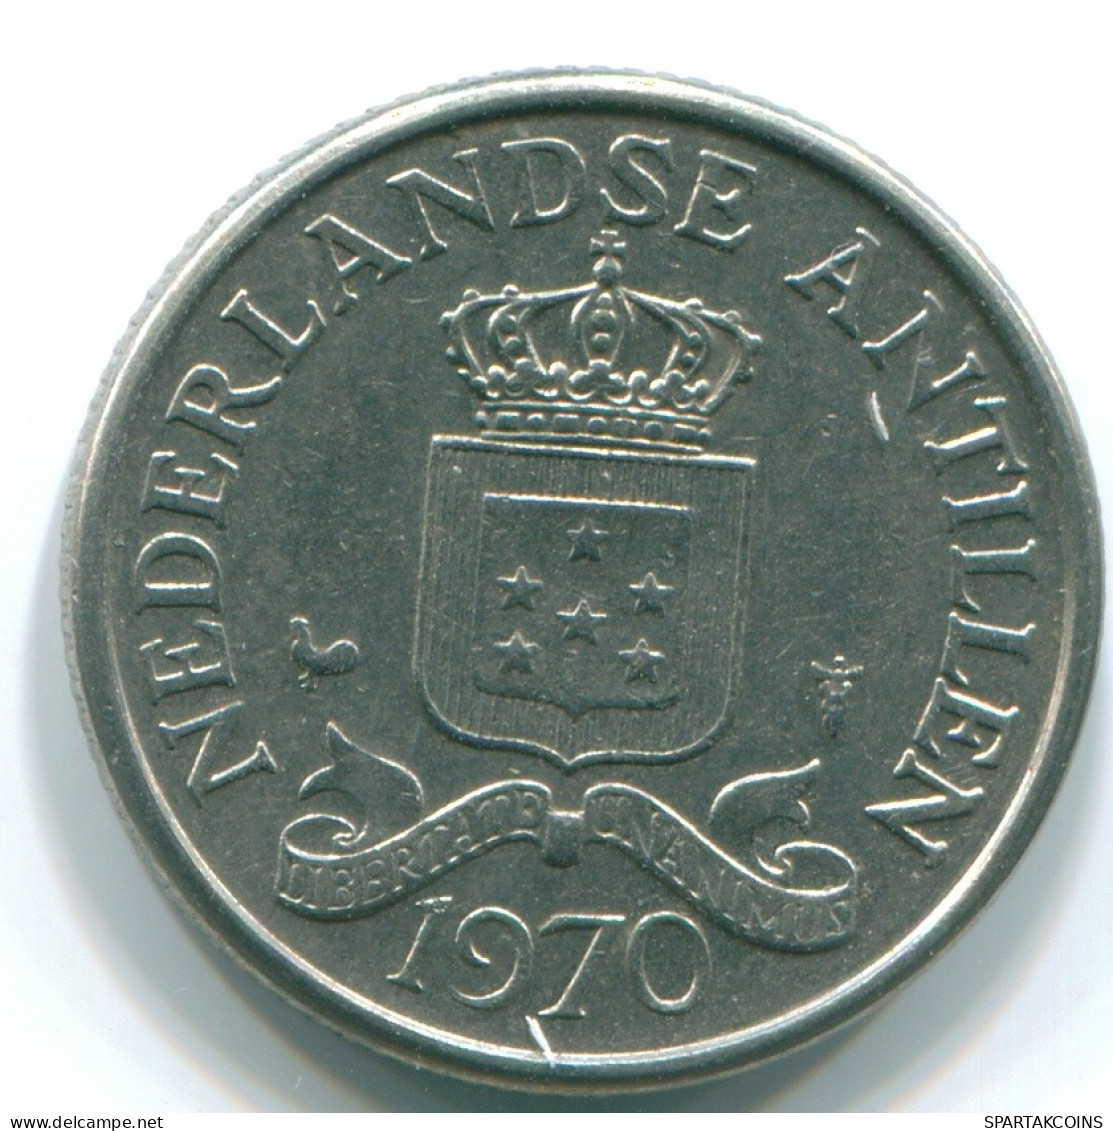 25 CENTS 1970 NETHERLANDS ANTILLES Nickel Colonial Coin #S11456.U.A - Nederlandse Antillen